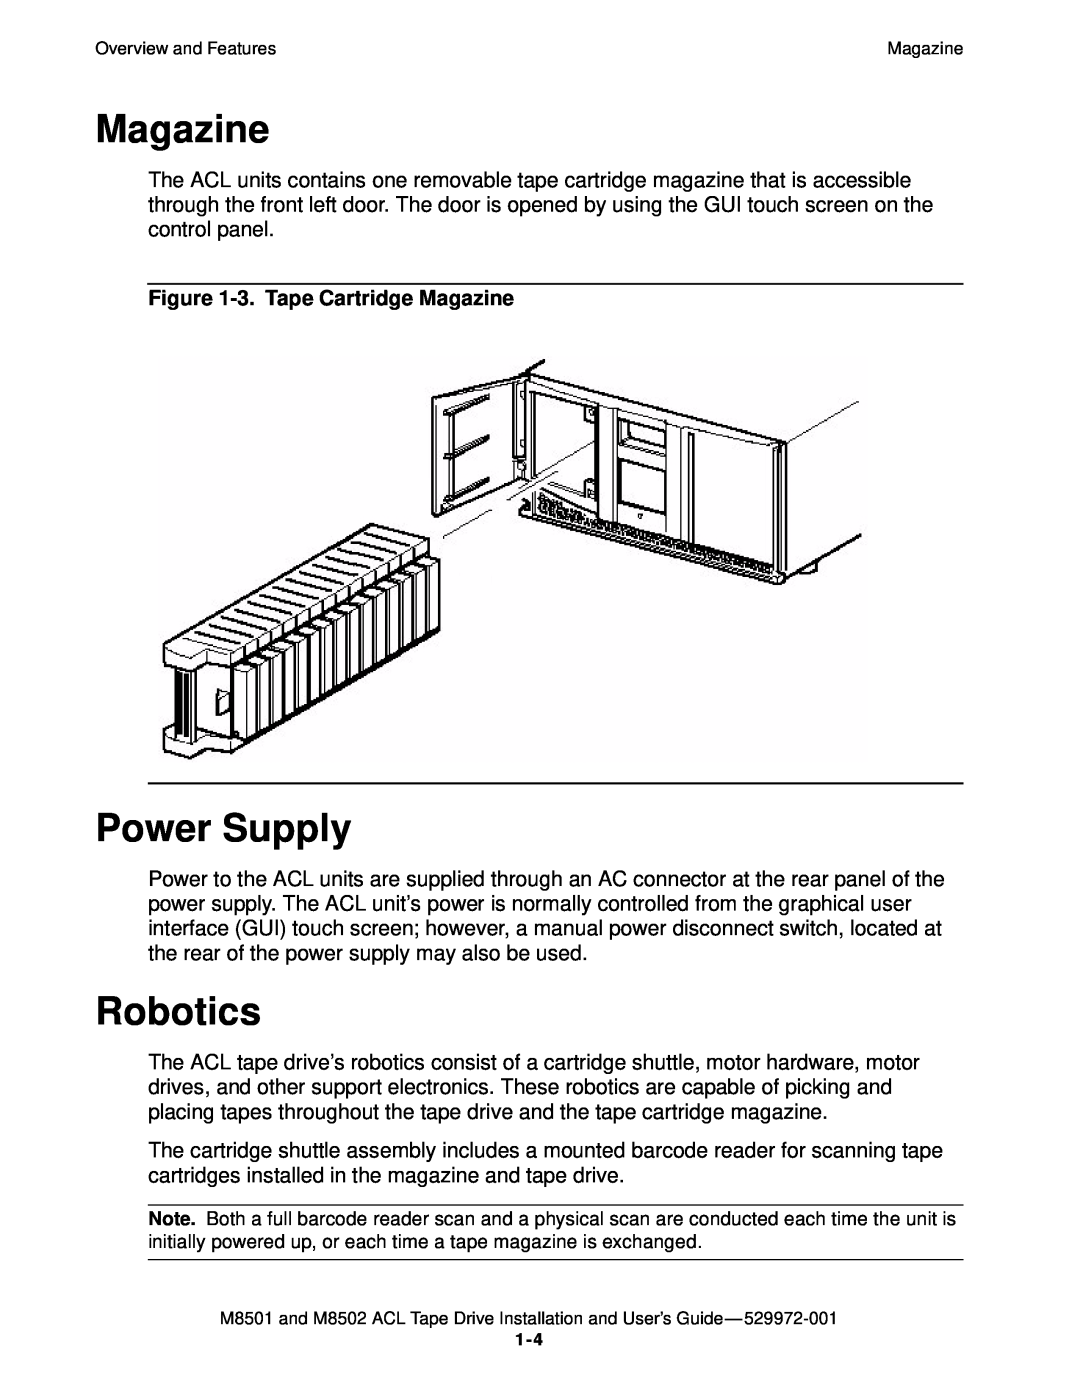 SMC Networks M8501 manual Power Supply, Robotics, 3. Tape Cartridge Magazine 